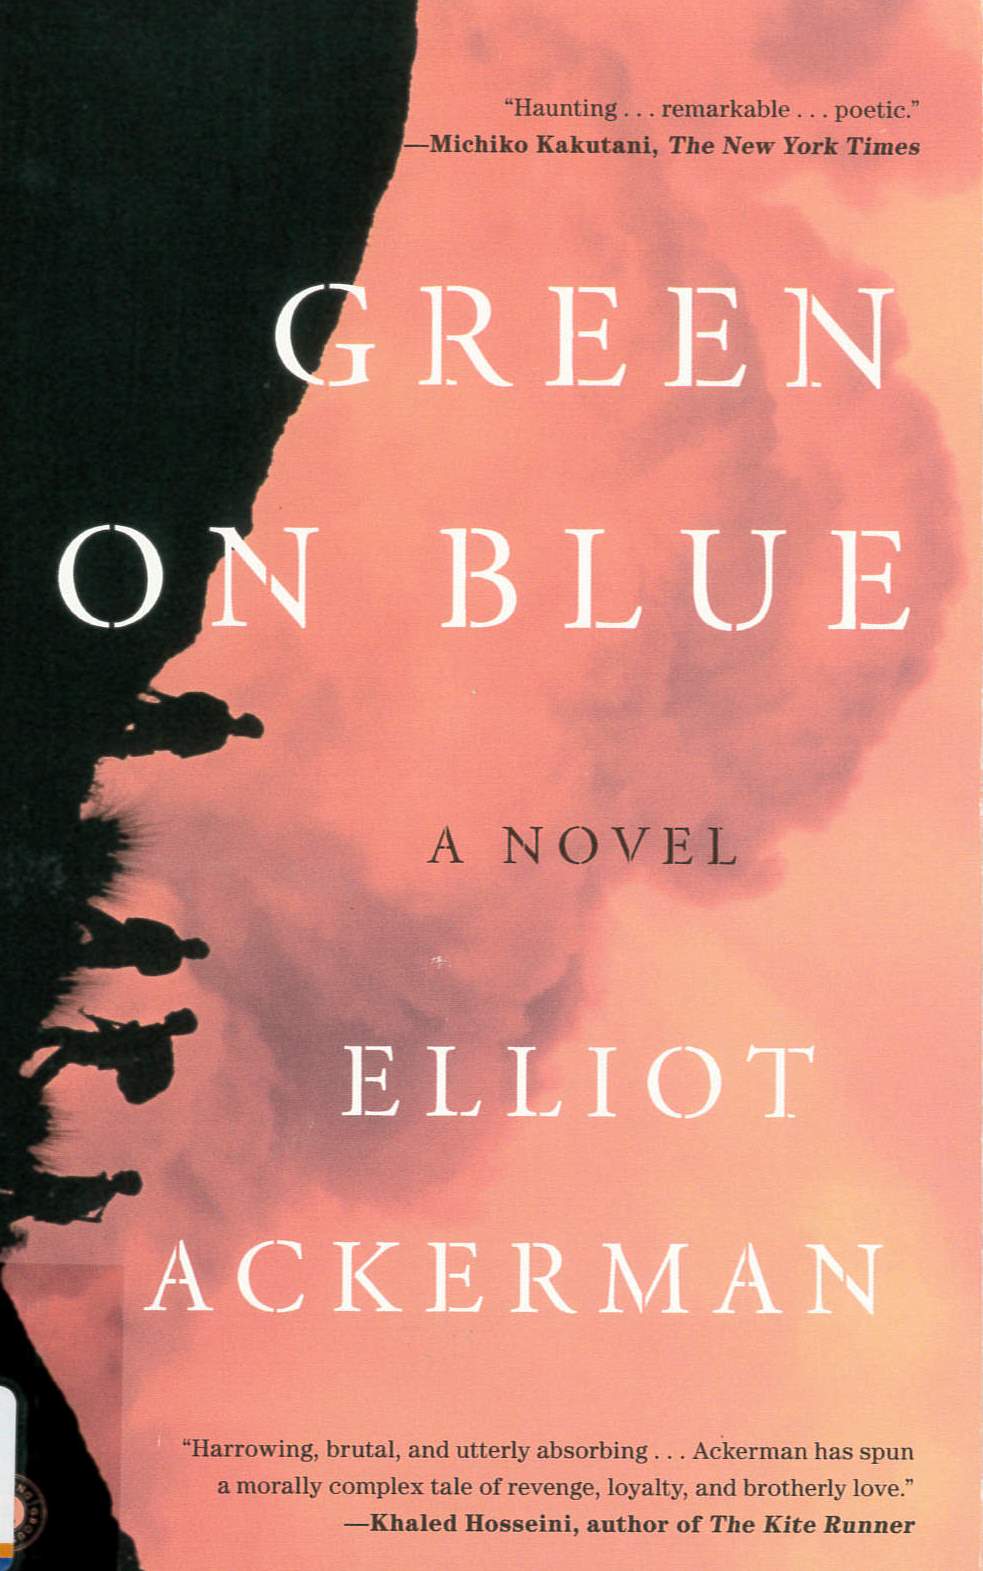 Green on blue a novel